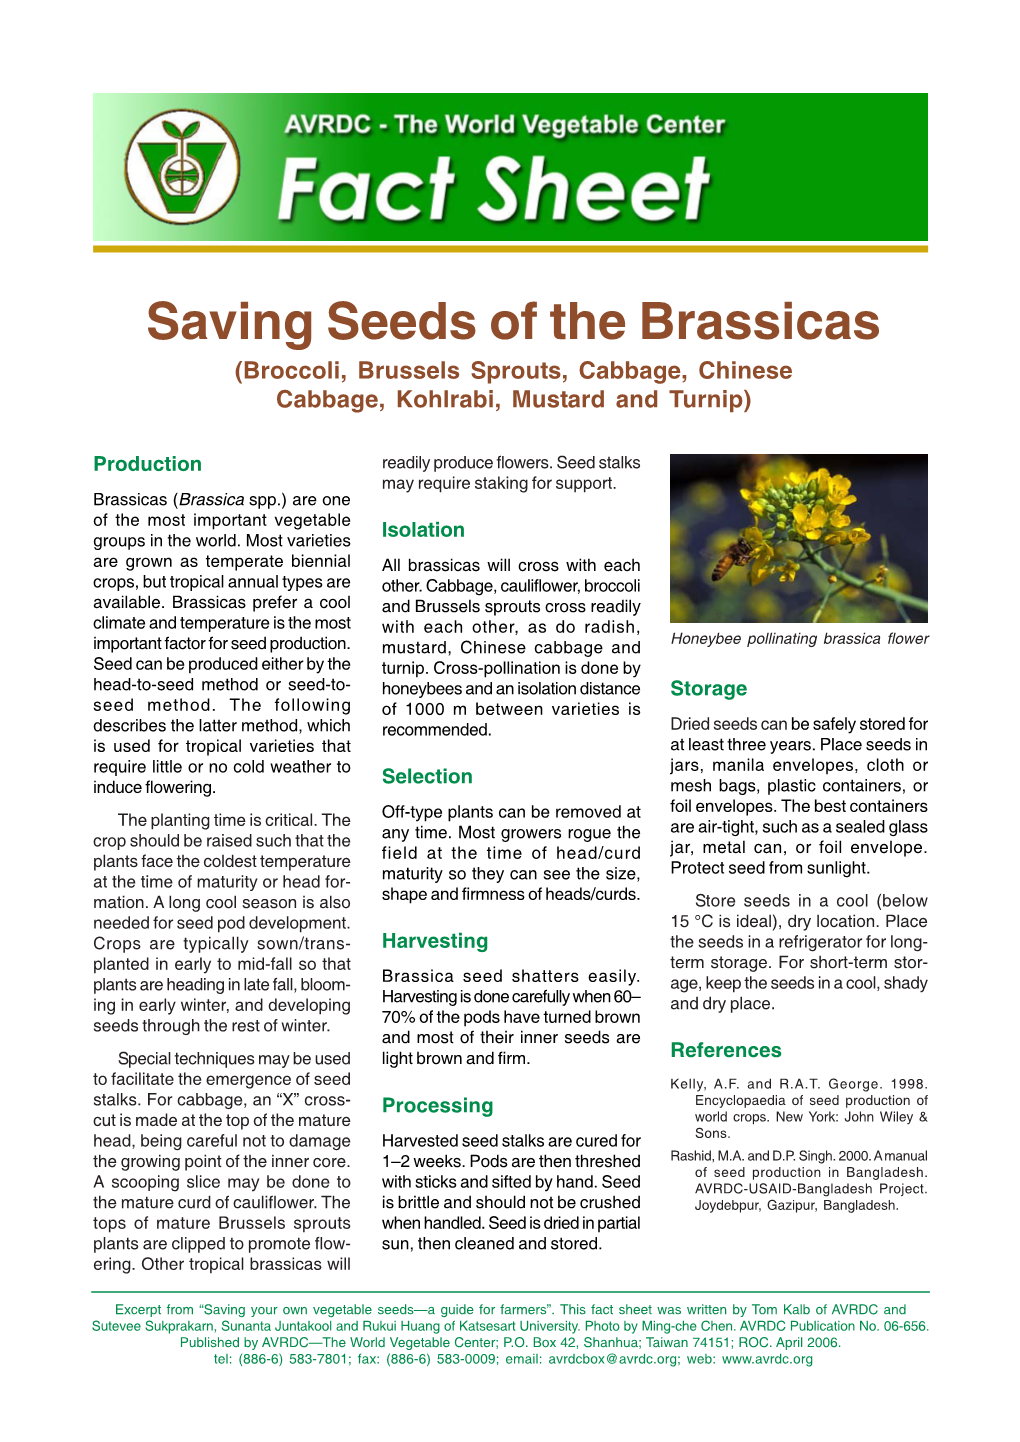 Saving Seeds of Brassicas